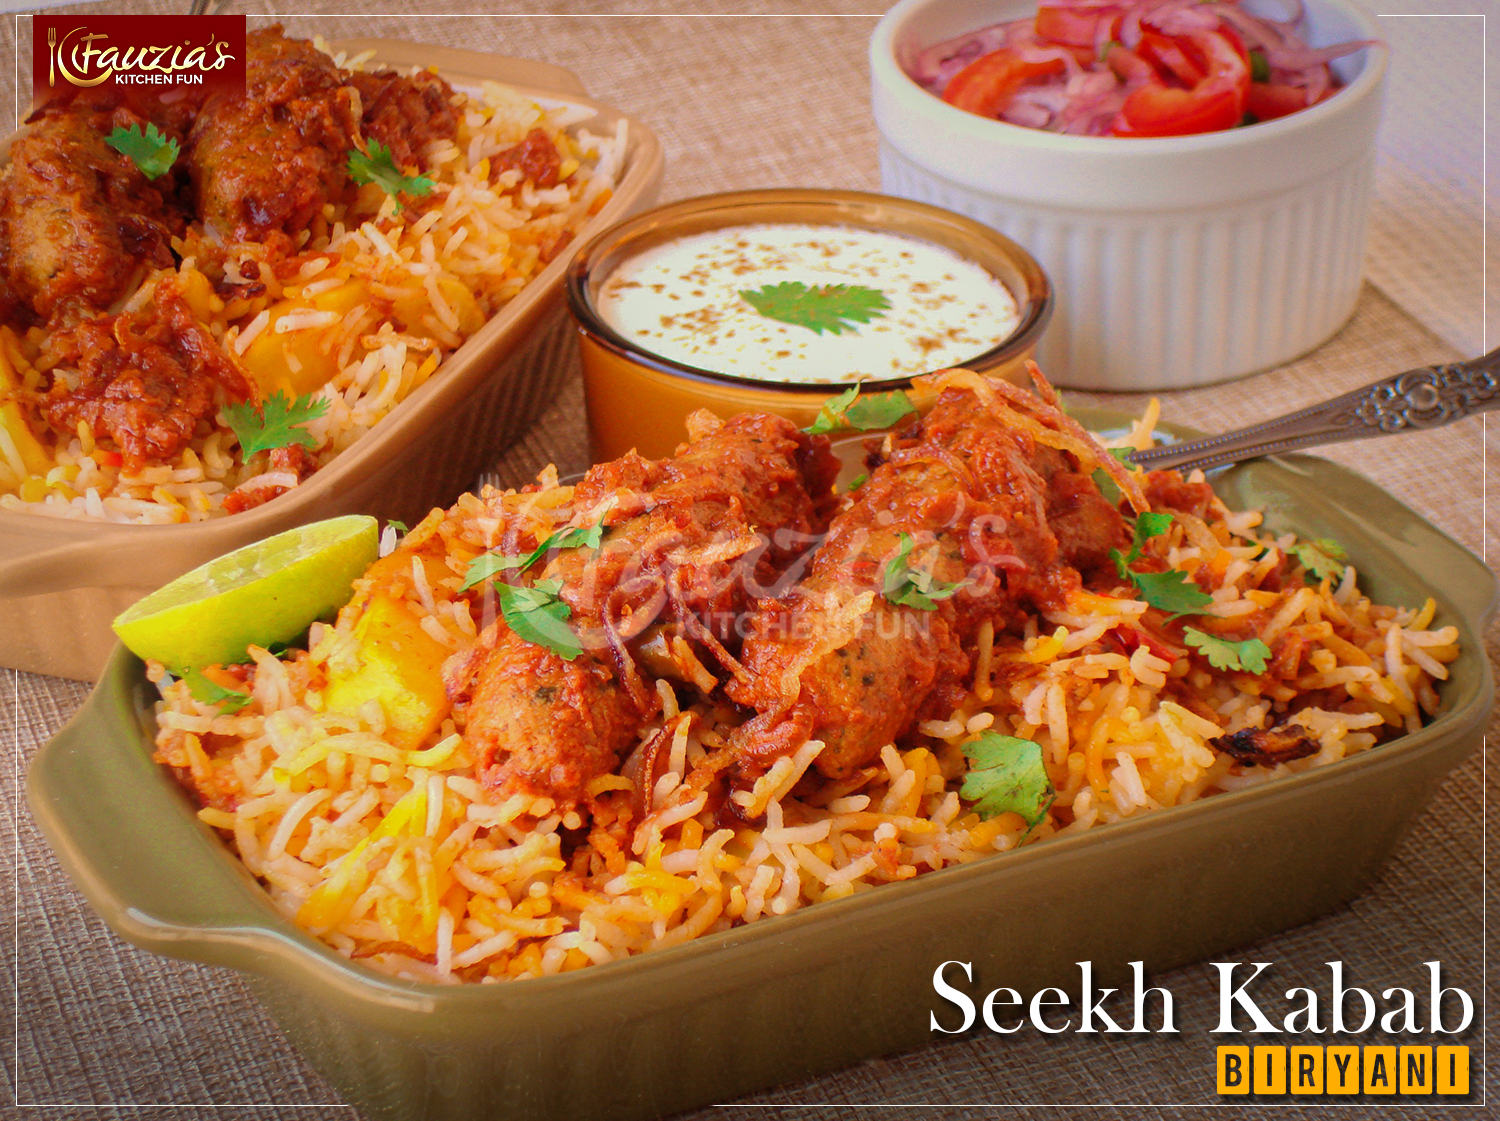 Seekh Kabab Biryani Fauzia S Kitchen Fun